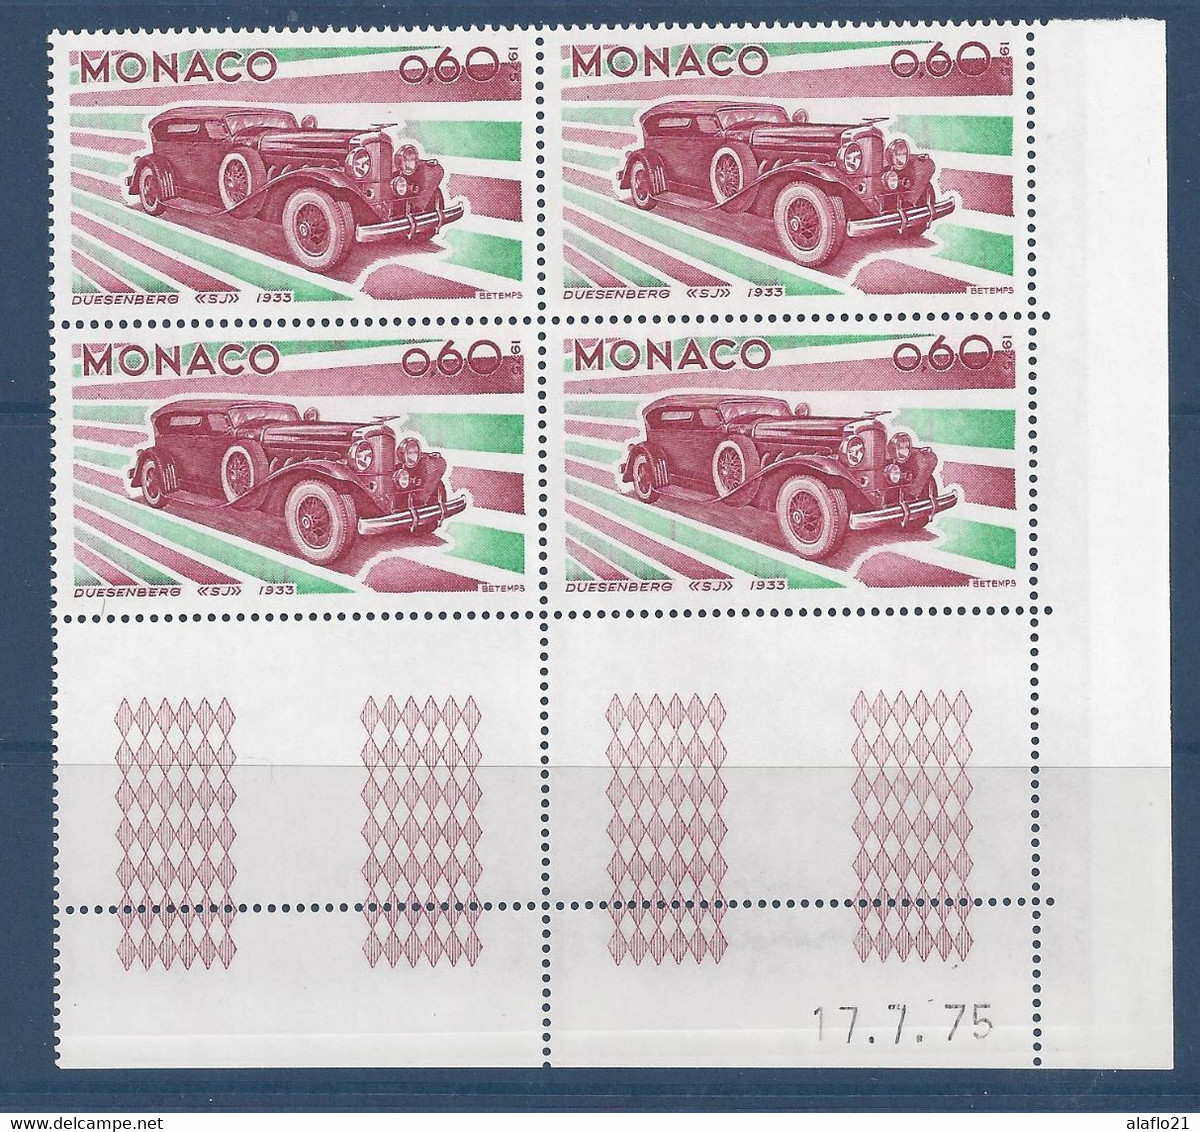 MONACO - N° 1023 - DUESENBERG 1933 - Bloc De 4 COIN DATE - NEUF SANS CHARNIERE - 17/7/75 - Unused Stamps